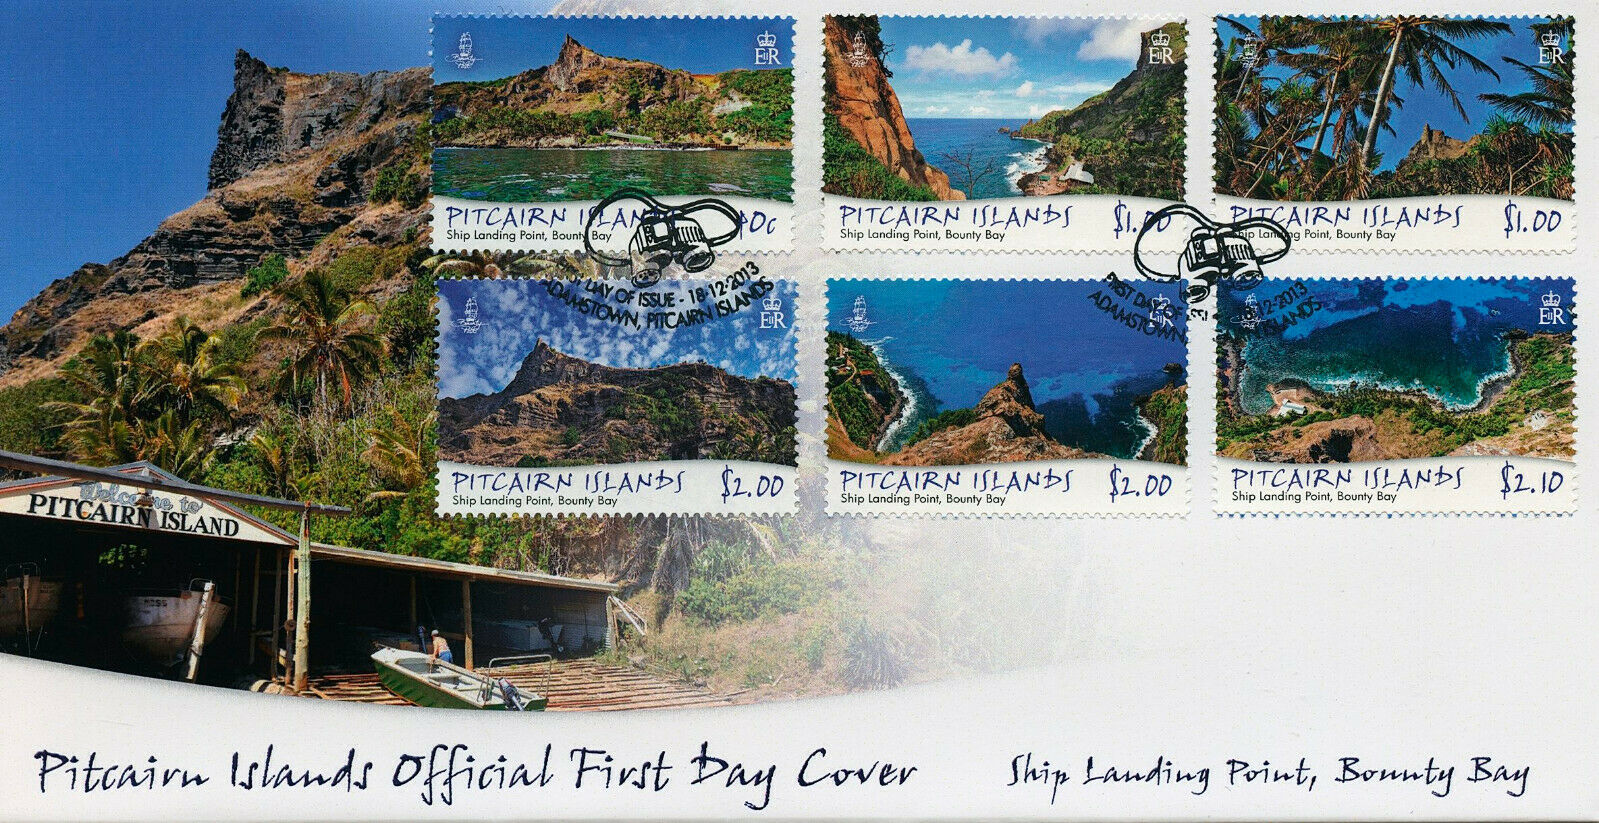 Pitcairn Islands 2013 FDC Landscapes Stamps Ship Landing Point Bounty Bay 6v Set